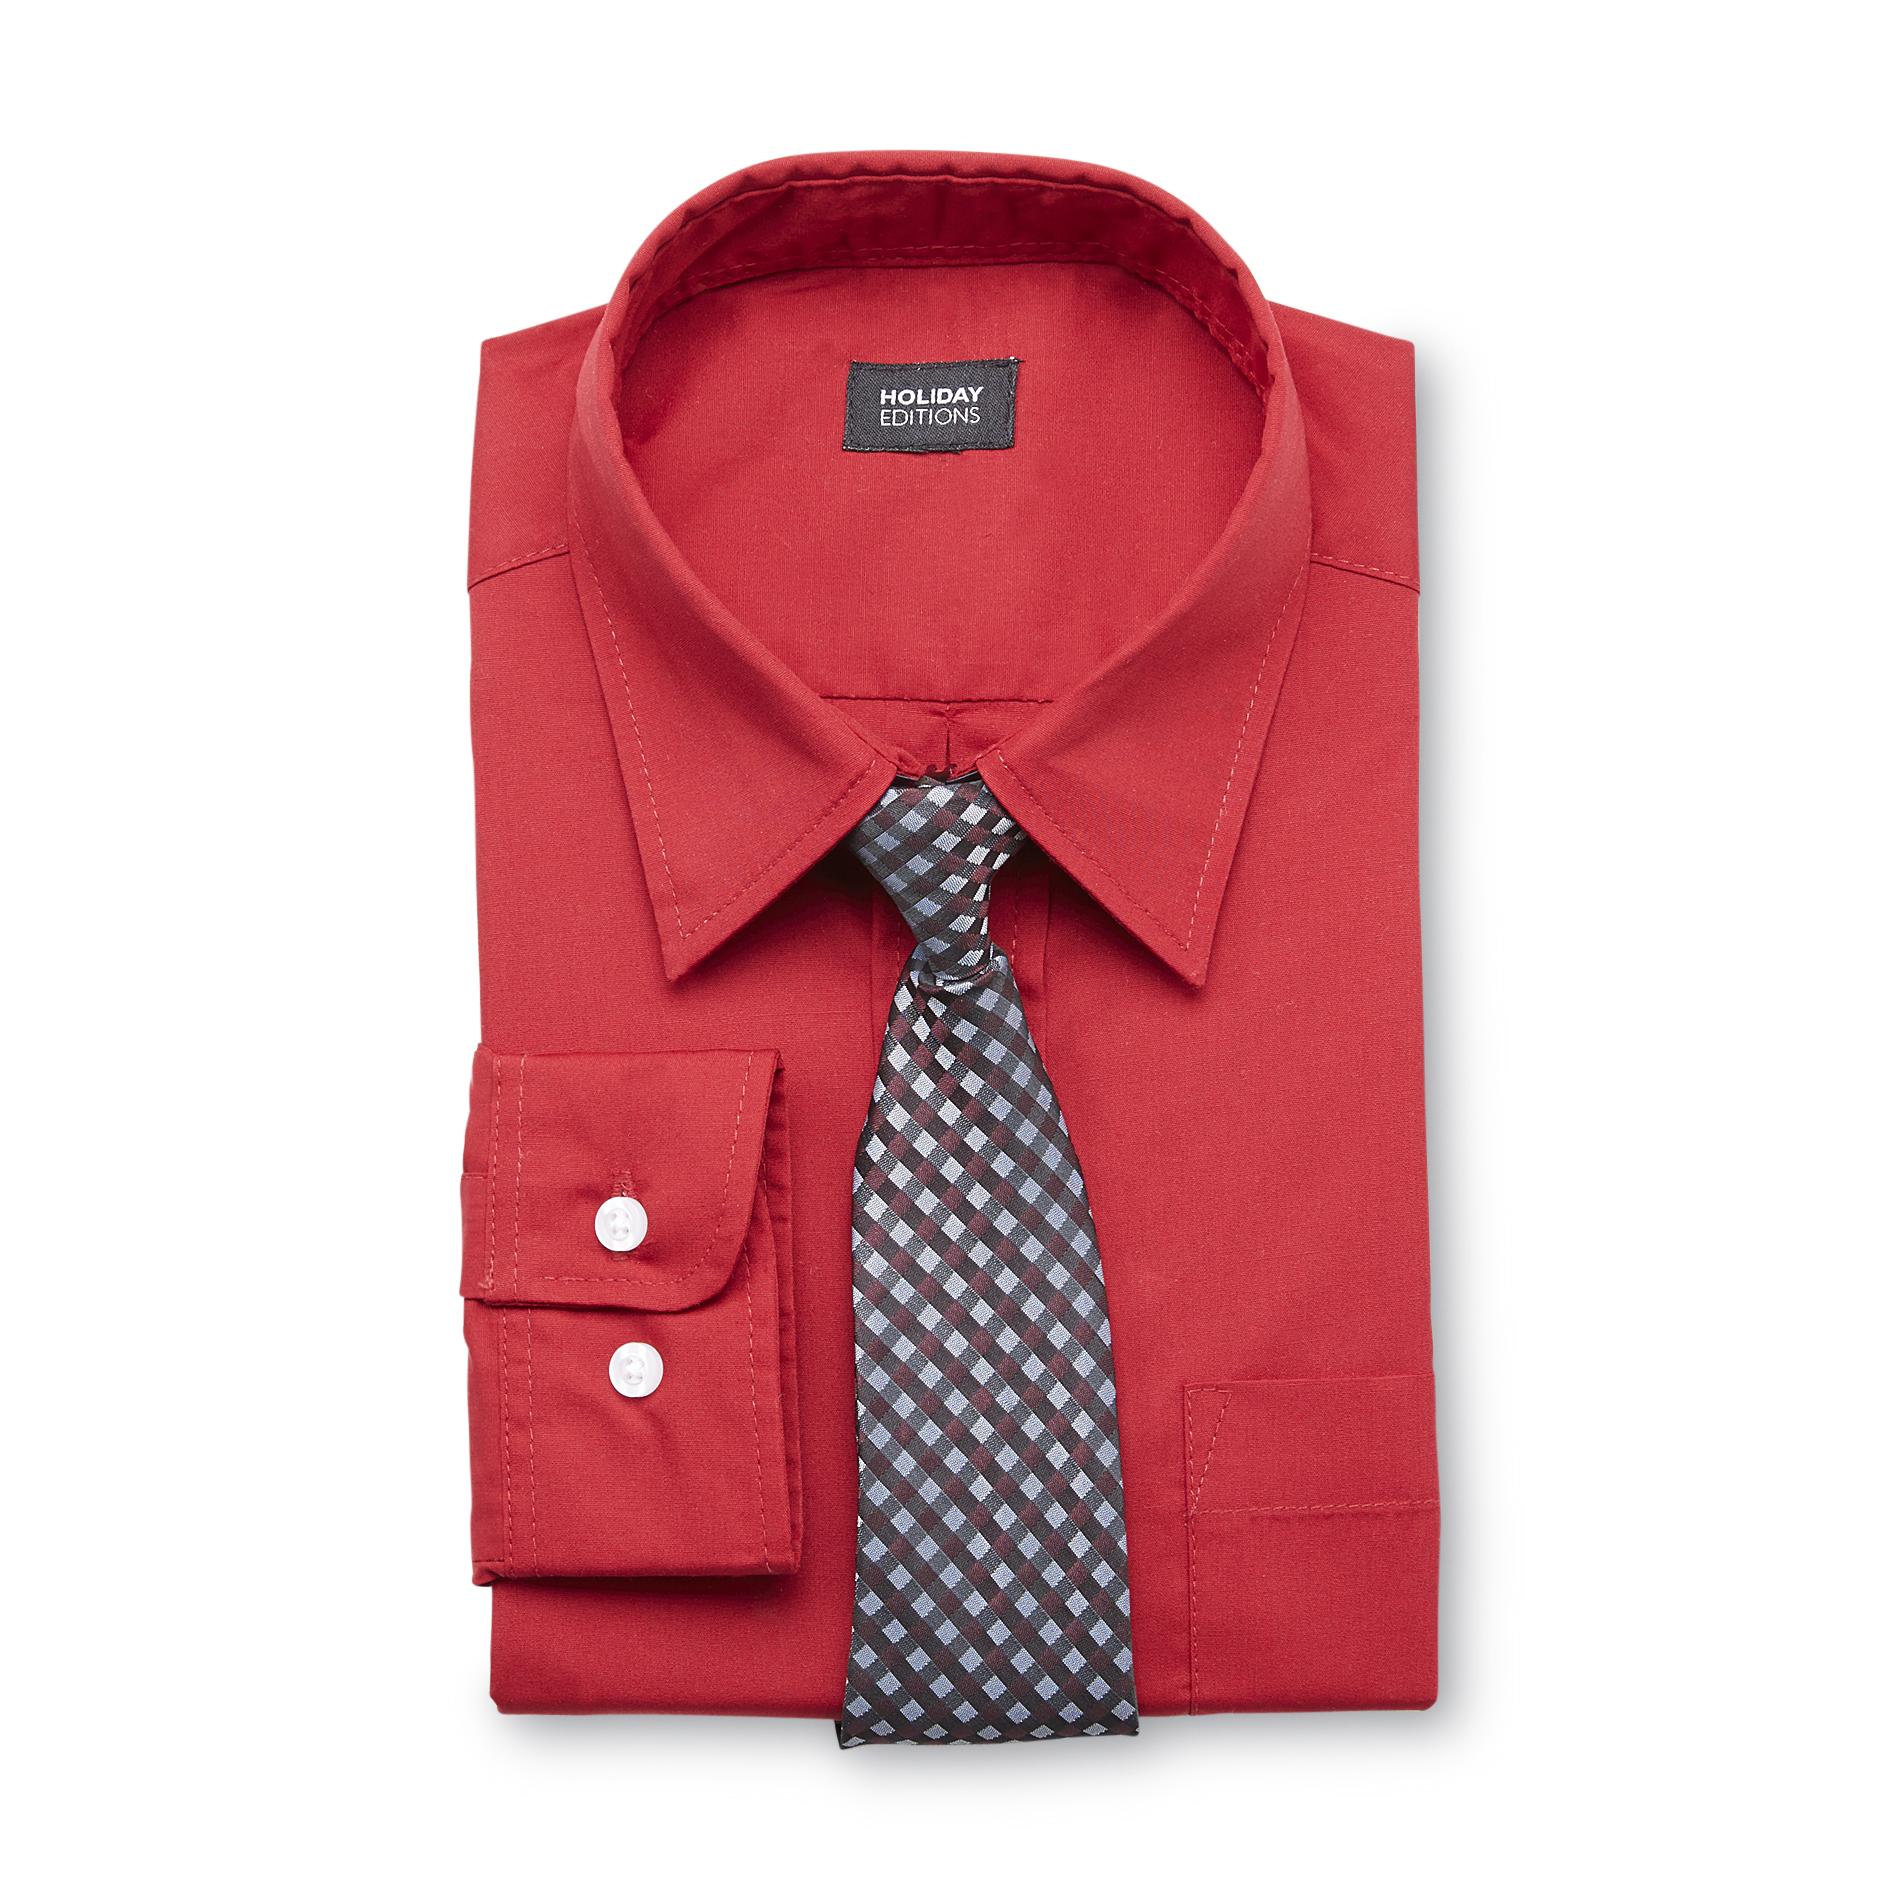 Holiday Editions Boy's Dress Shirt & Clip-On Necktie - Windowpane Plaid